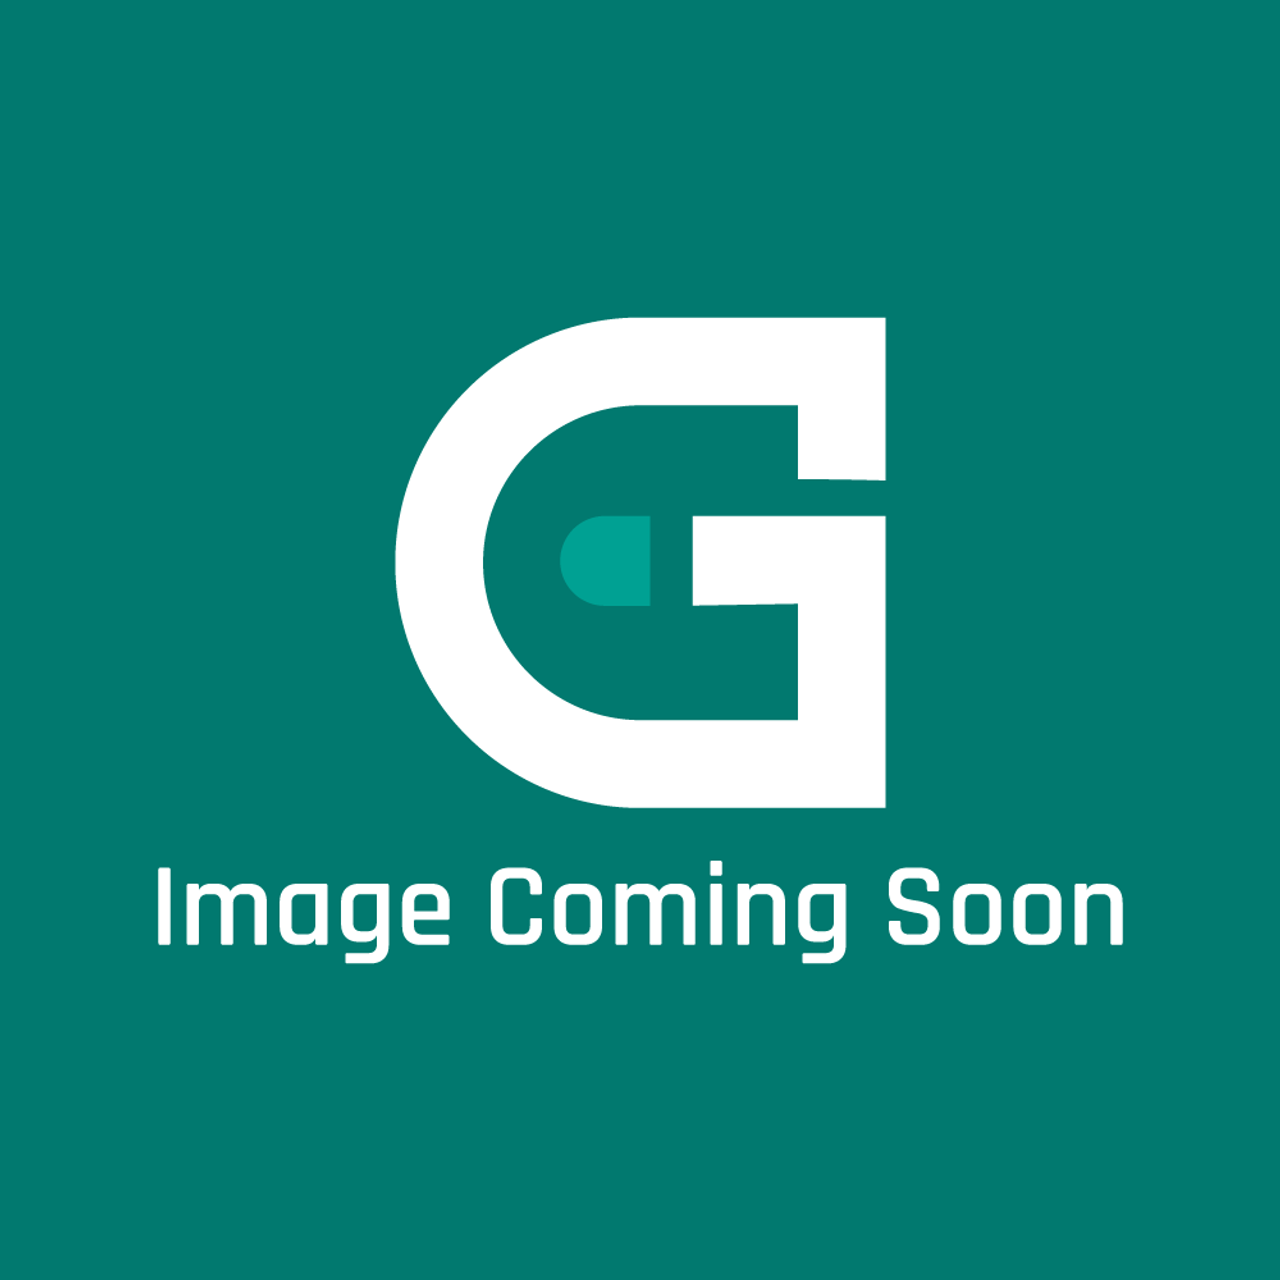 Garland 115346 - Kit, Door Switch Mech Co Ntrol, M - Image Coming Soon!